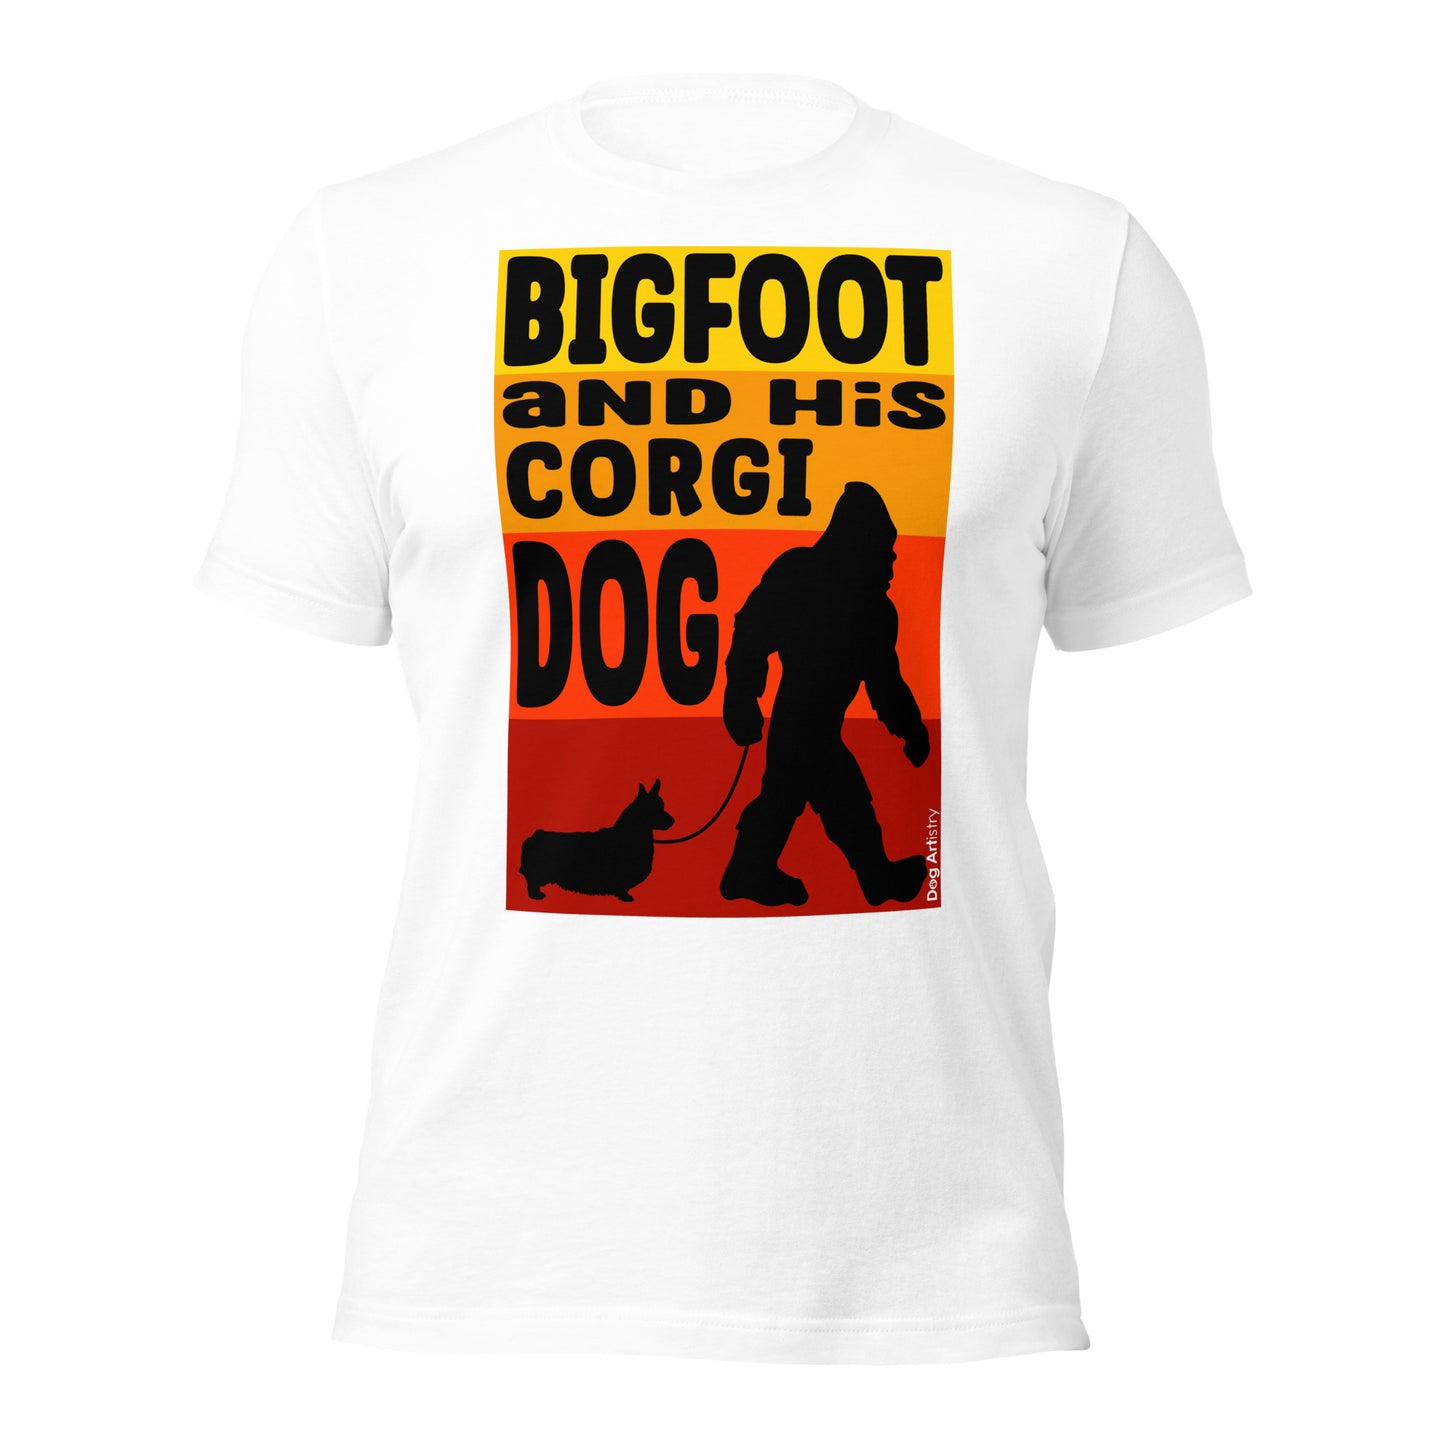 Big foot and his Corgi dog unisex white t-shirt by Dog Artistry.